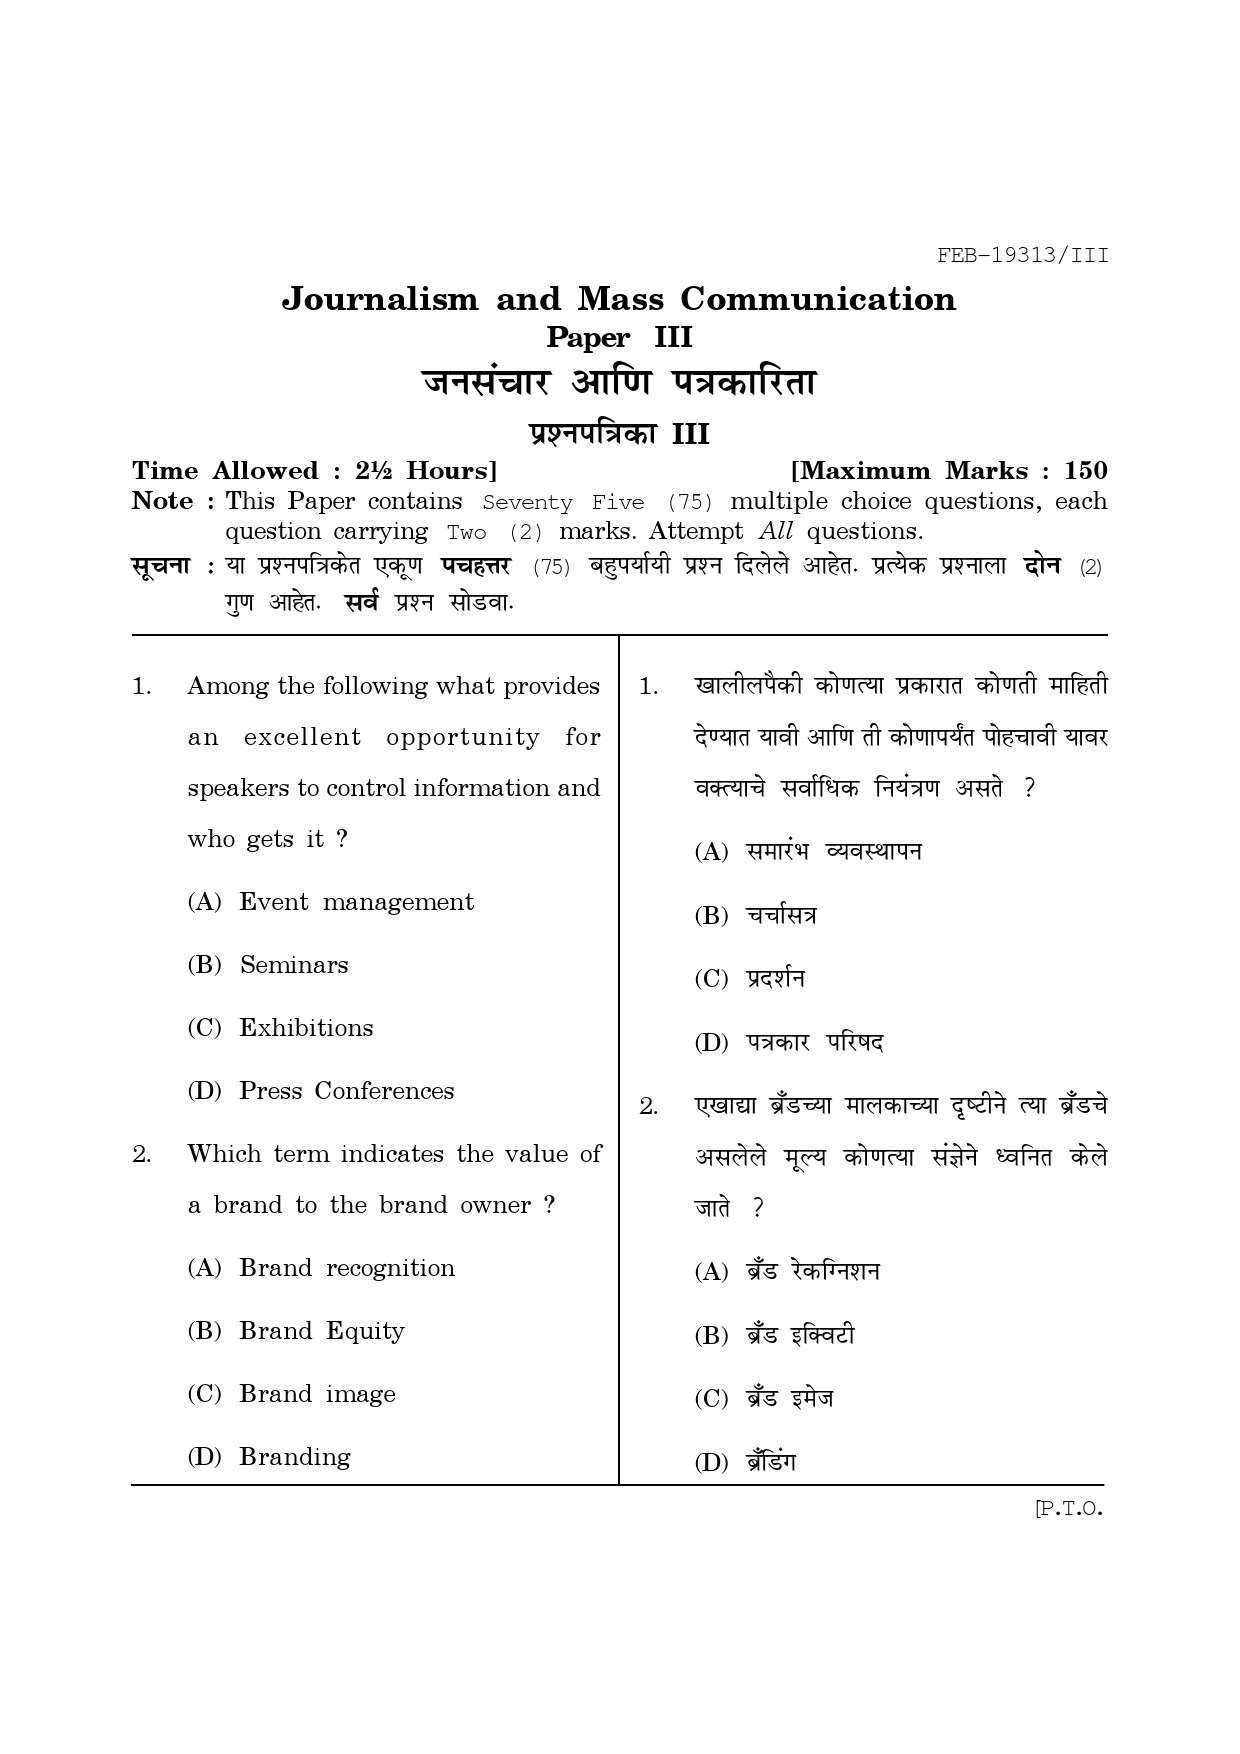 Maharashtra SET Journalism and Mass Communication Question Paper III February 2013 1